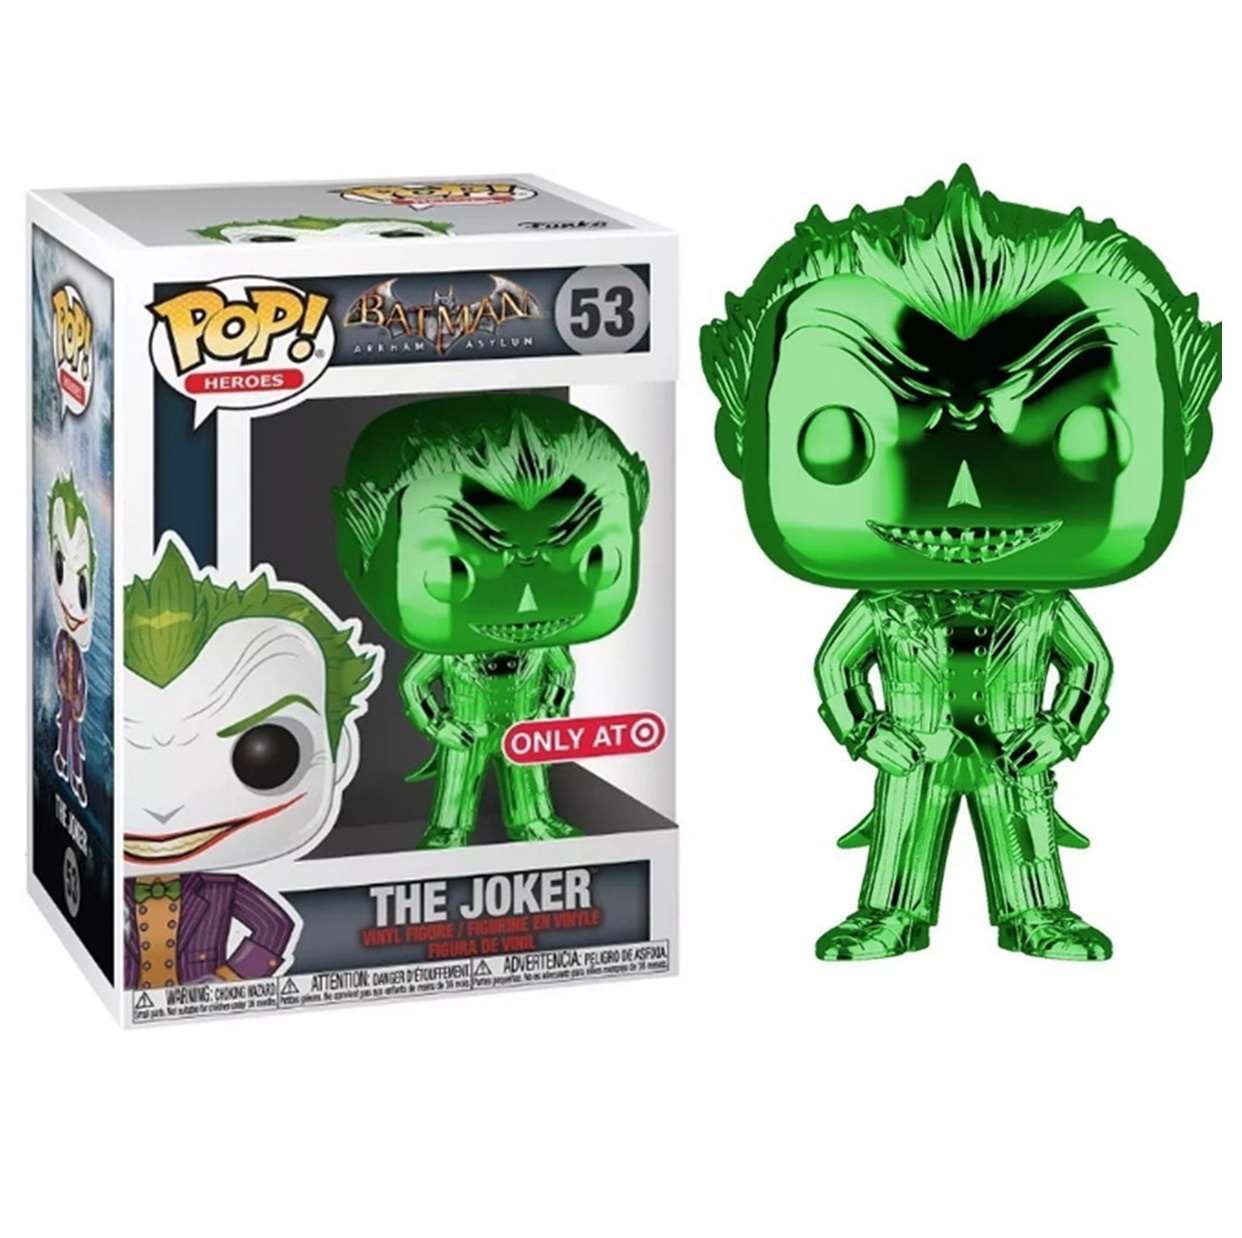 The Joker Green #53 Batman Arkham Asylum Funko Pop! Exclusivo Target